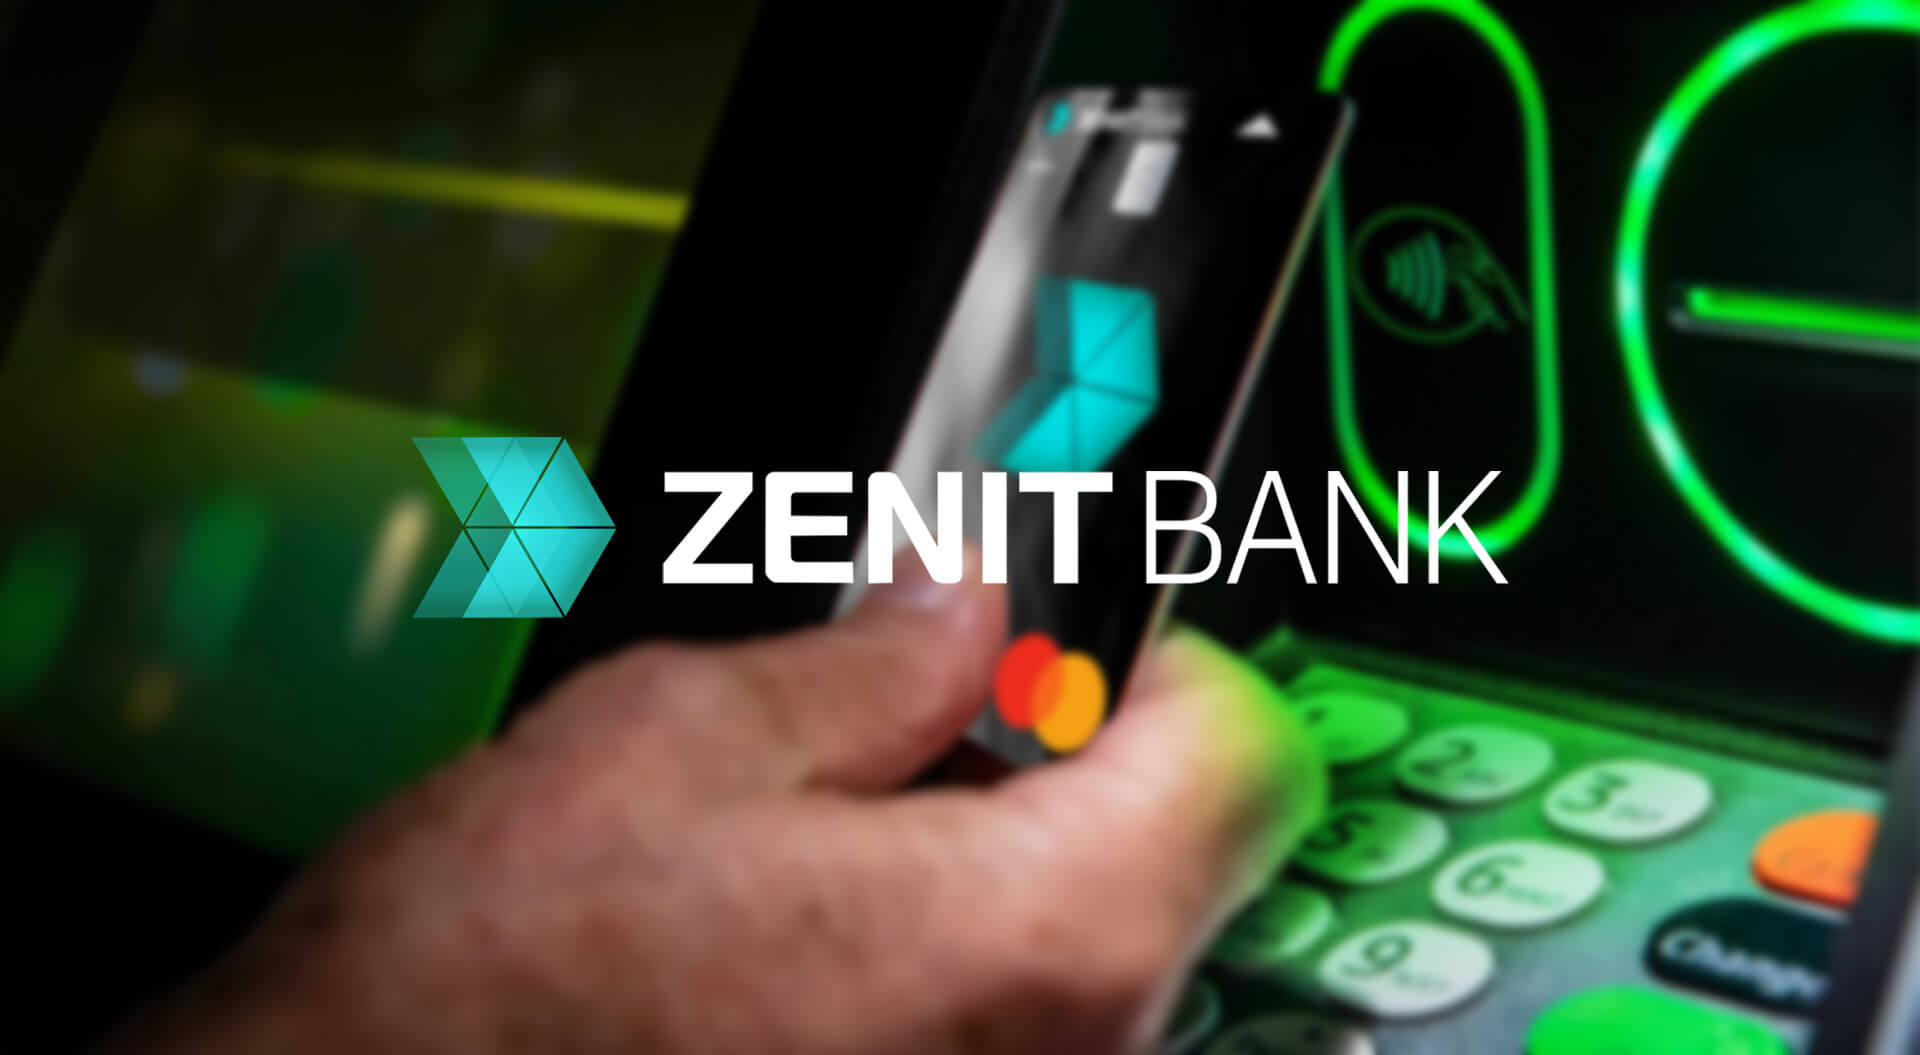 Zenit Bank Russia, Retail Branding, Brand Identity, Graphic Communications - CampbellRigg Agency